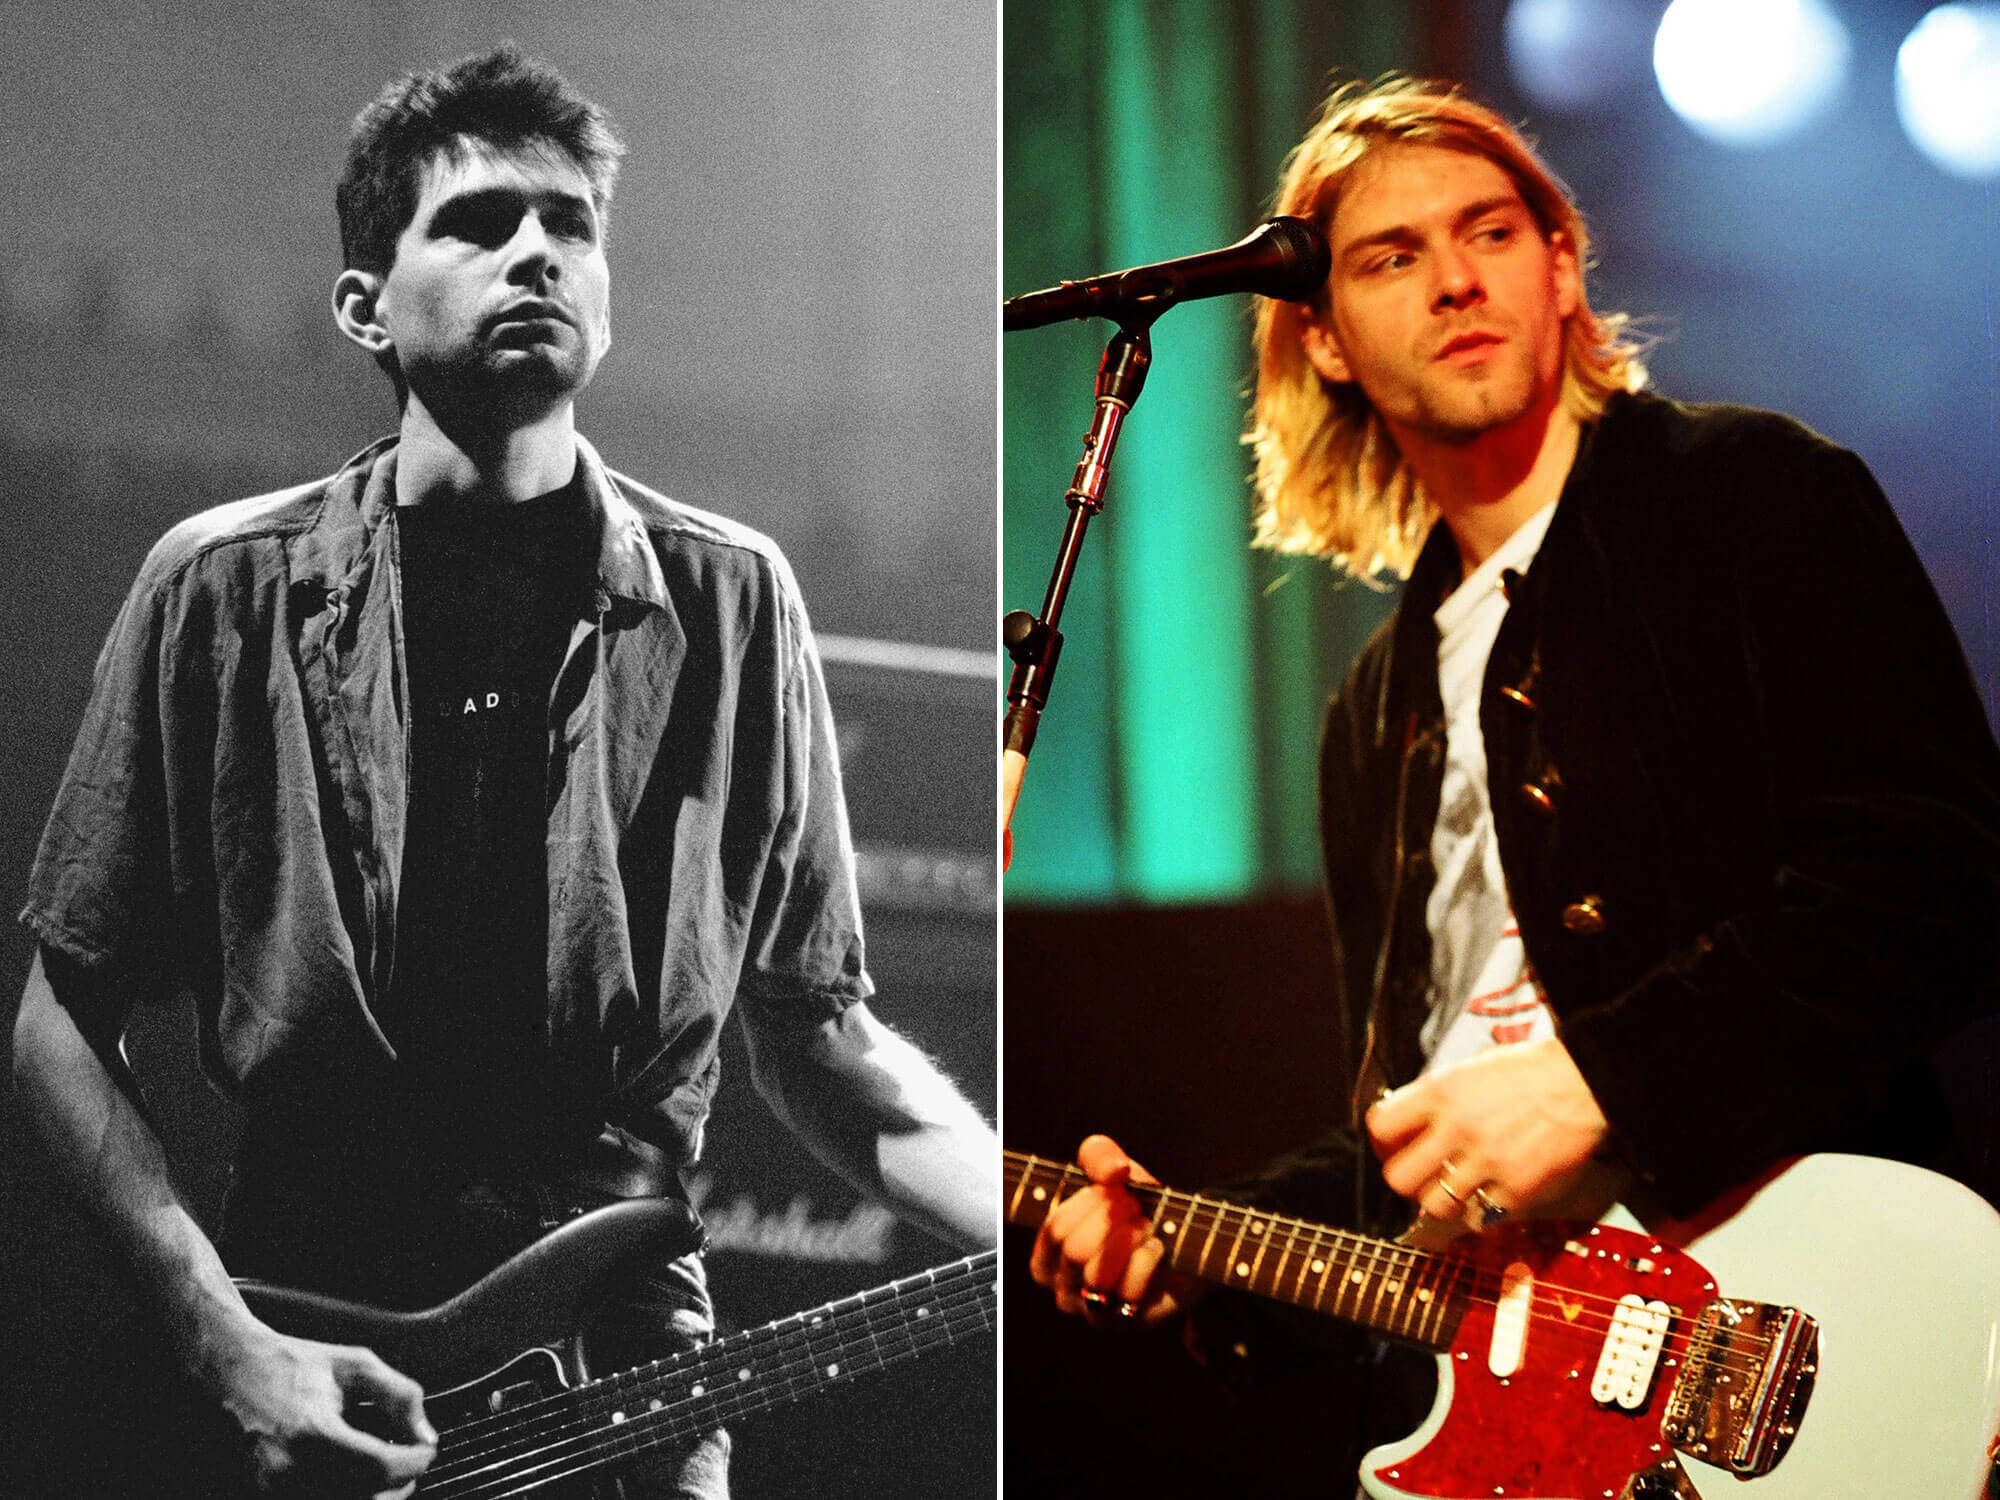 [L-R] Steve Albini and Kurt Cobain